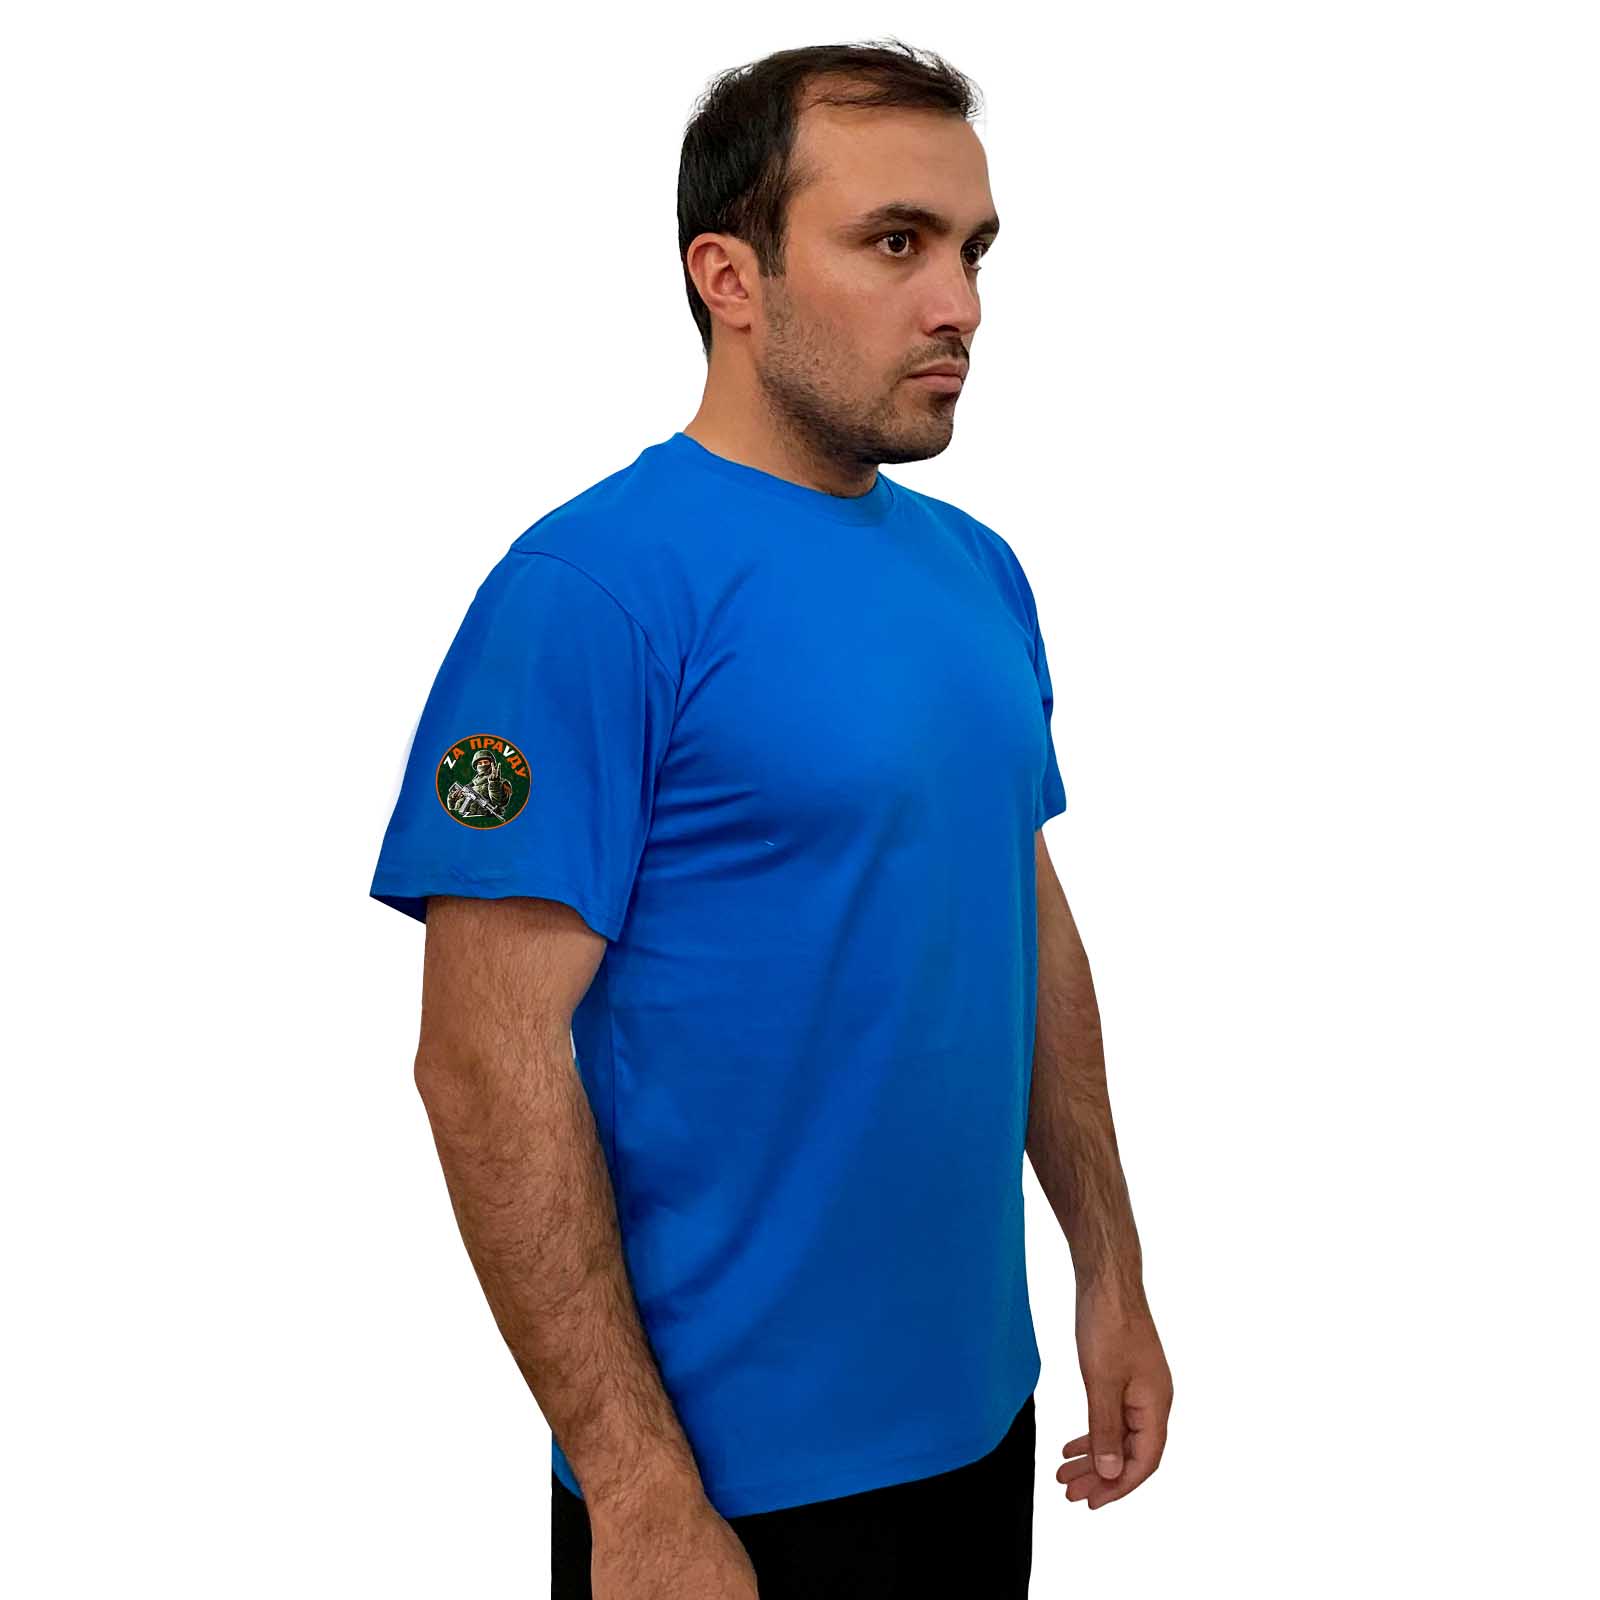 Купить крутую голубую футболку Zа ПраVду онлайн